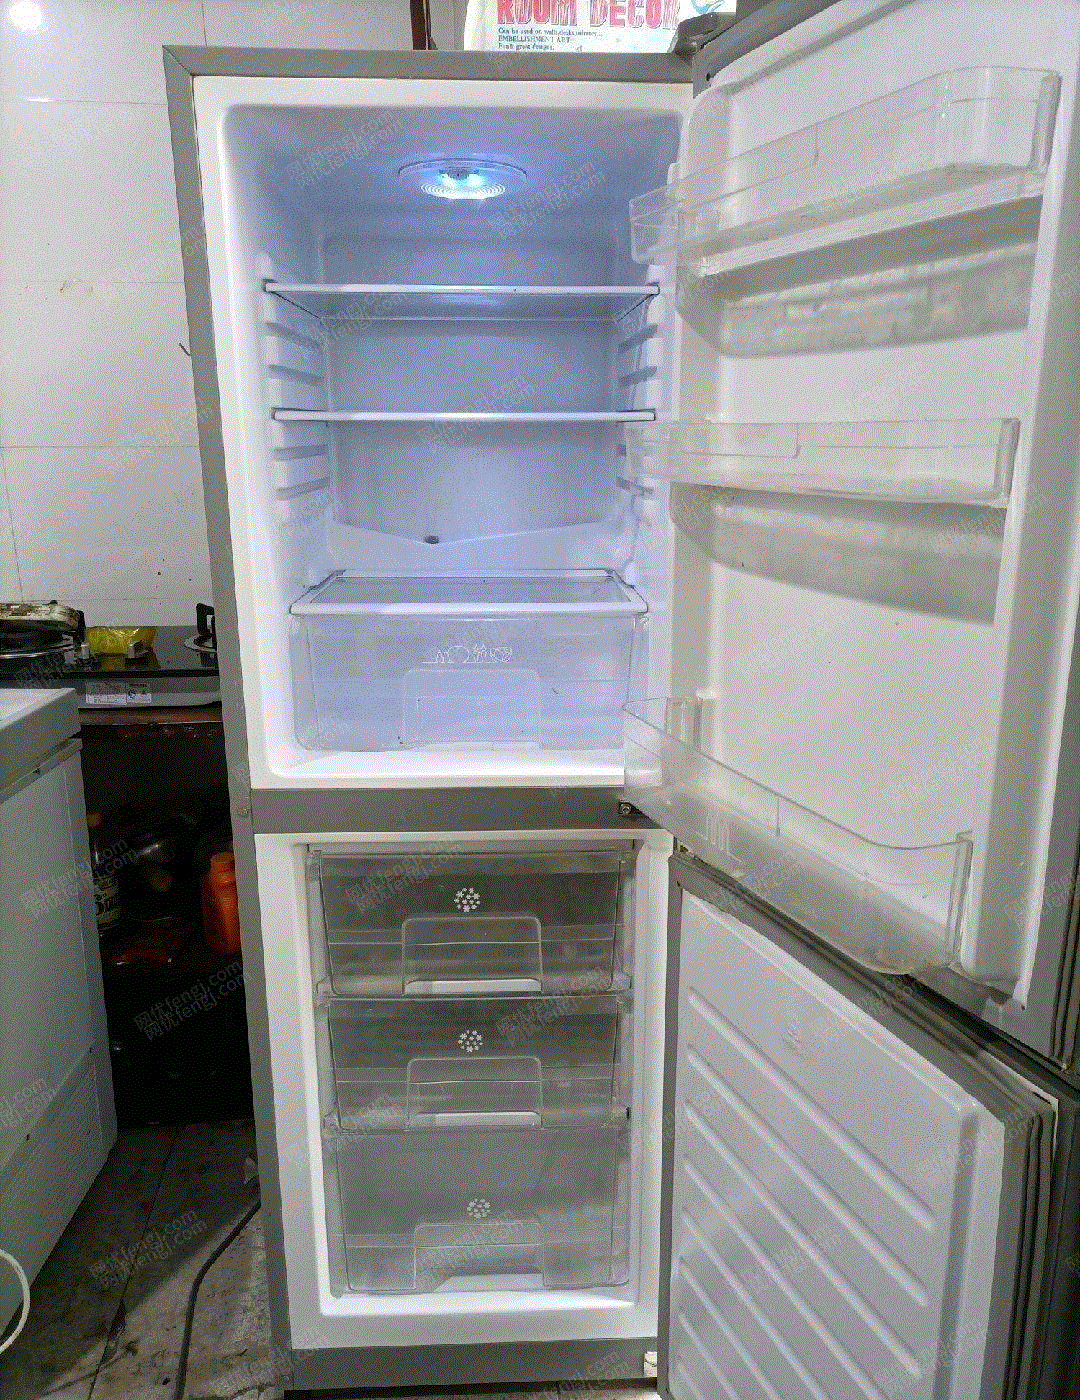 冰箱价格